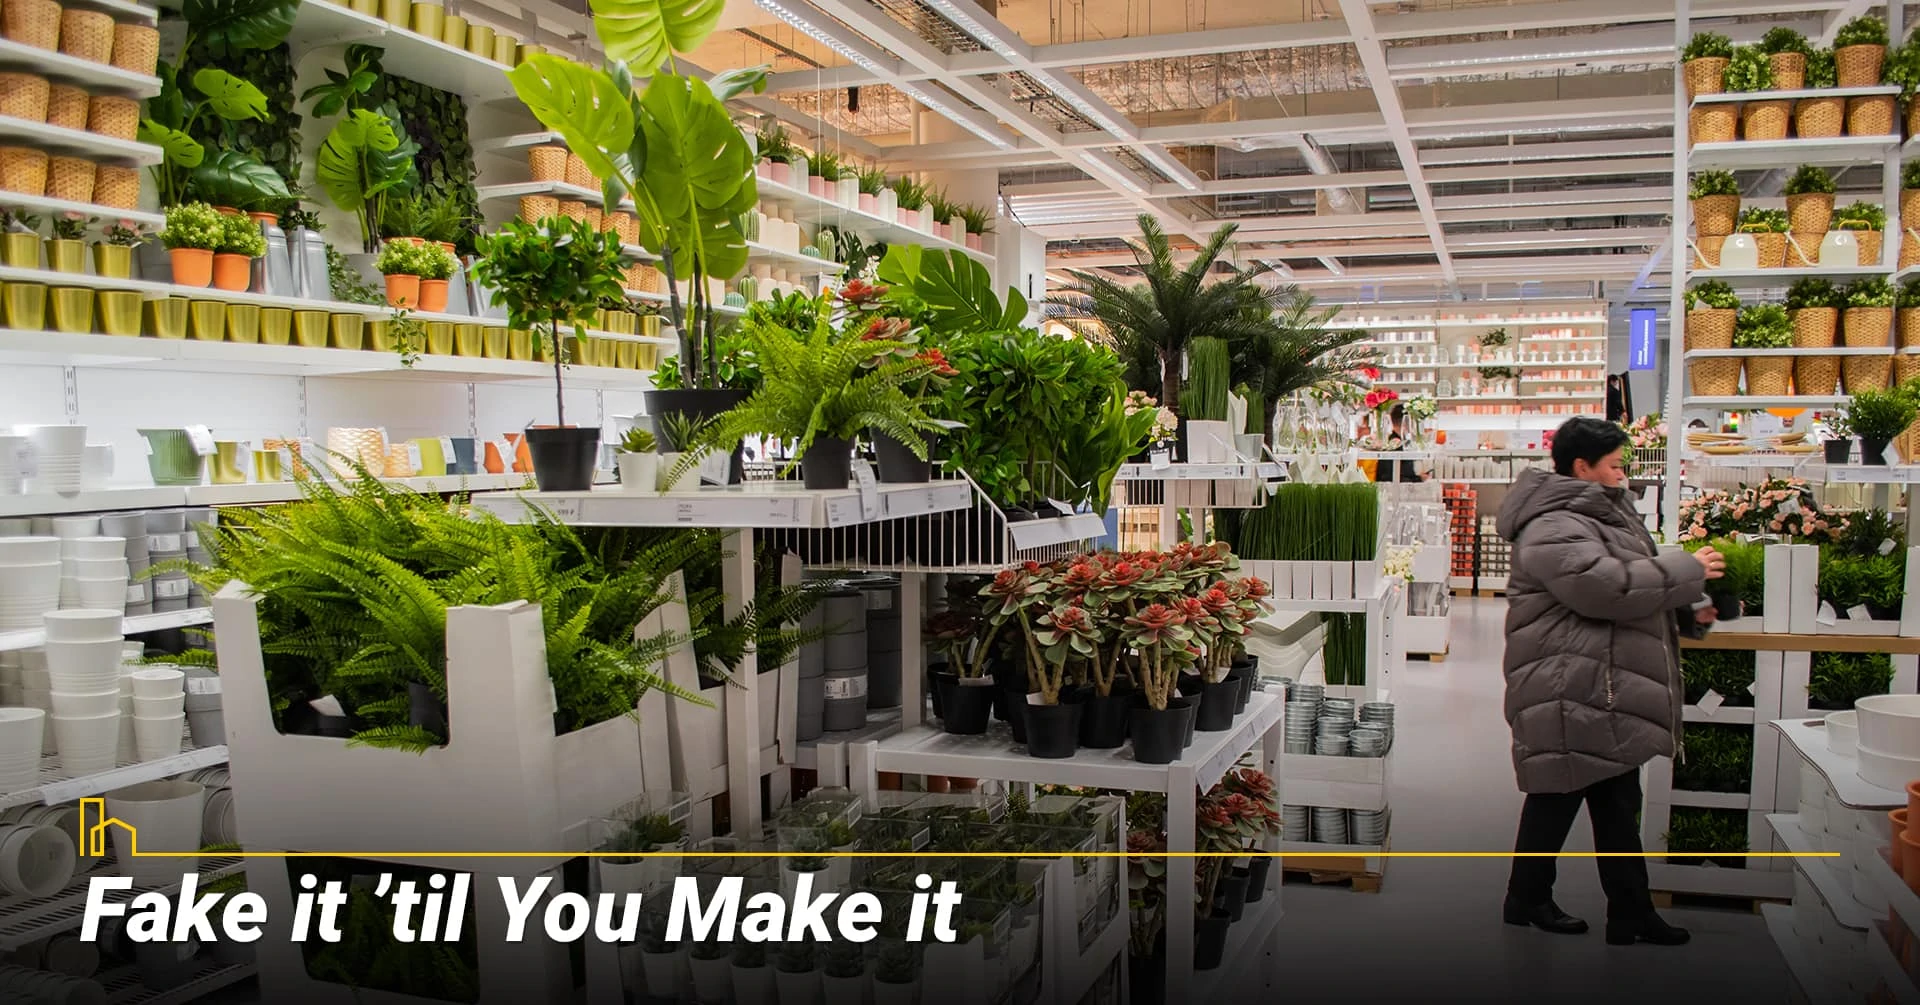 Fake it ’til You Make it, use artificial plants